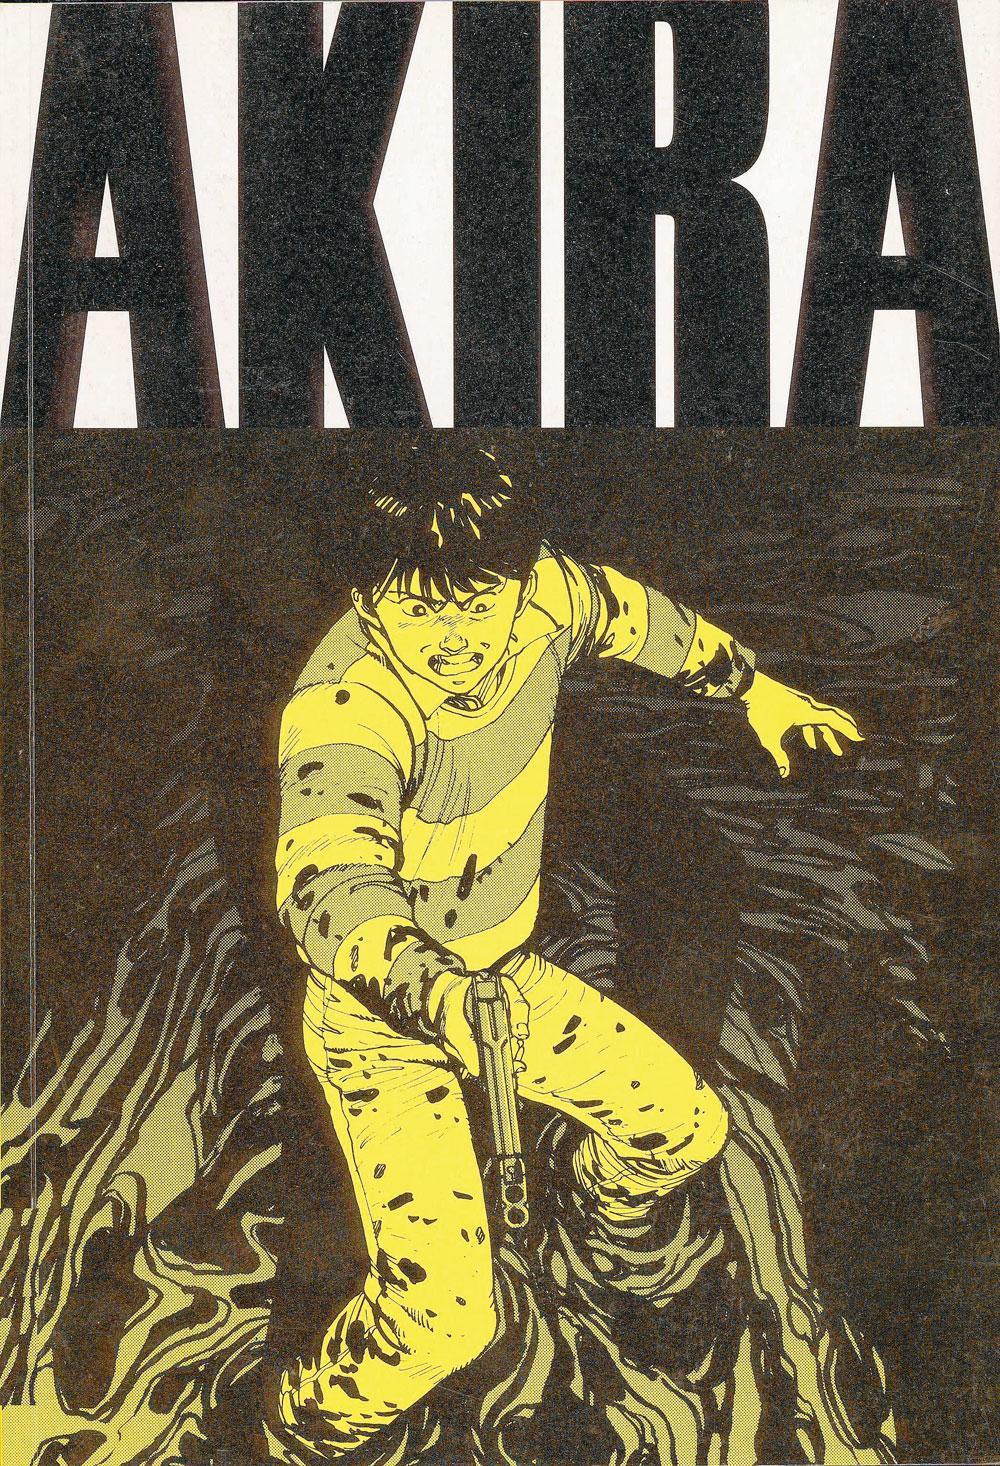 Akira, de Katsukiro Otomo,  premier chef-d'oeuvre du genre.